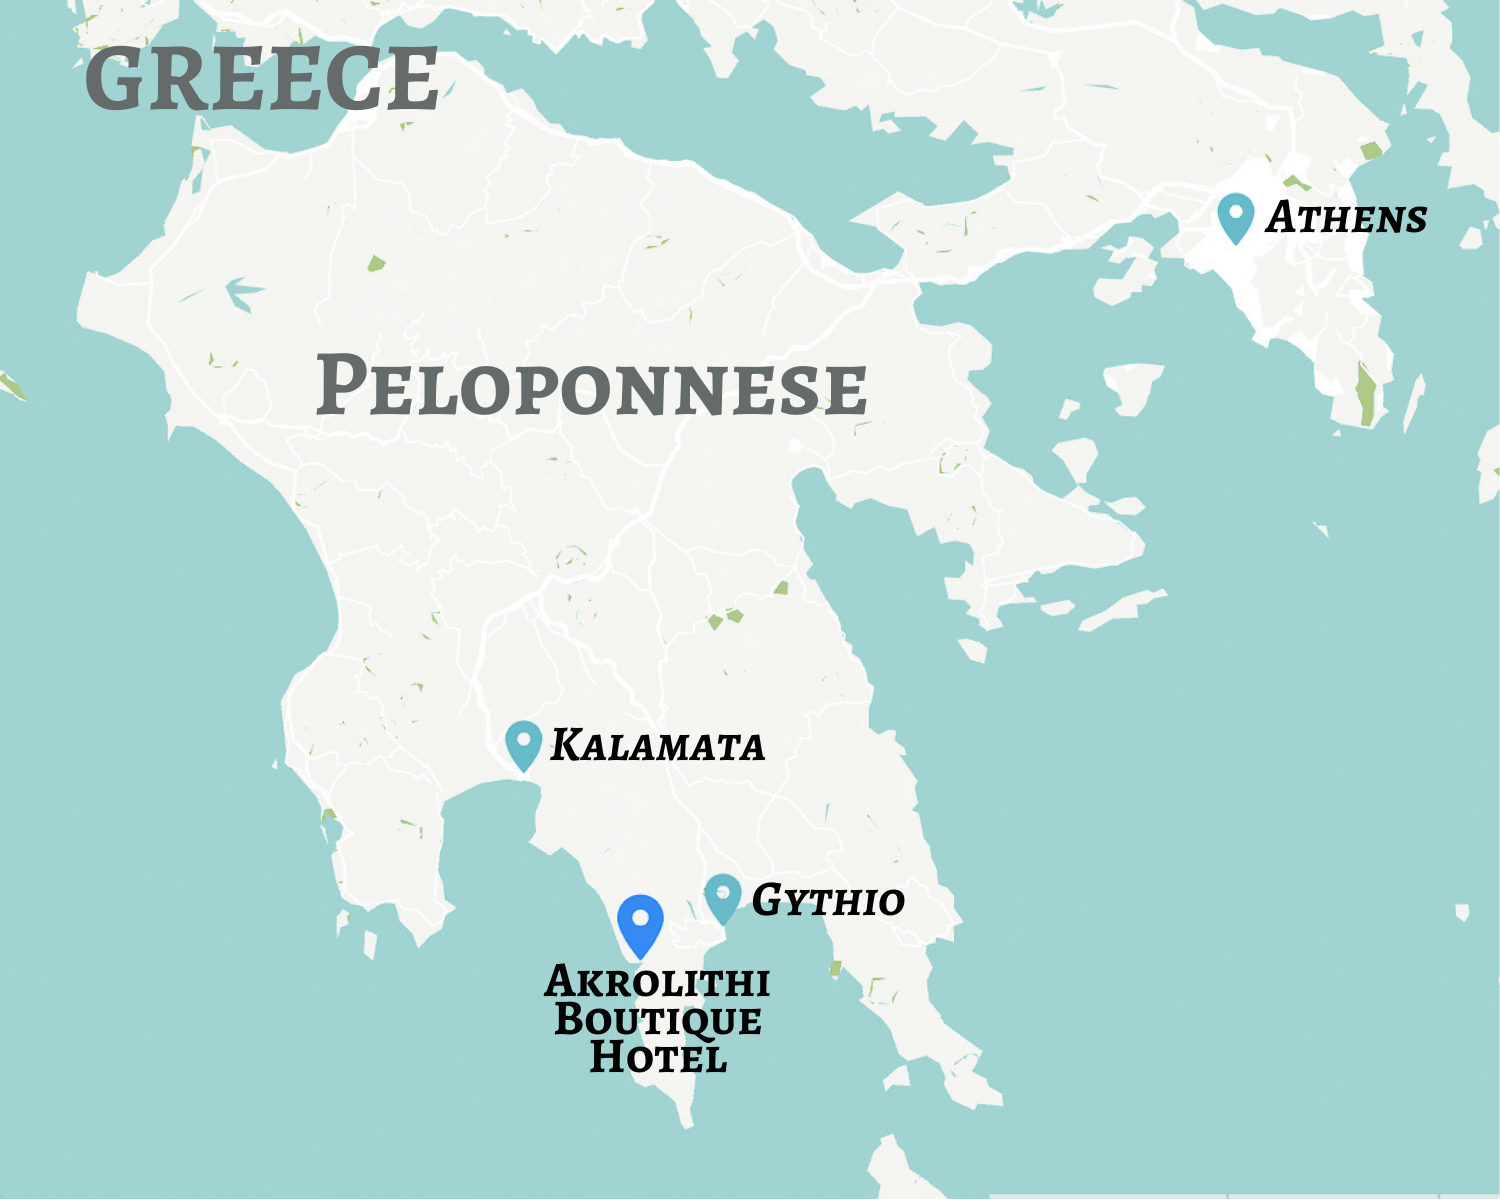 Location of Akrolithi Boutique Hotel Greece Photo Heatheronhertravels.com